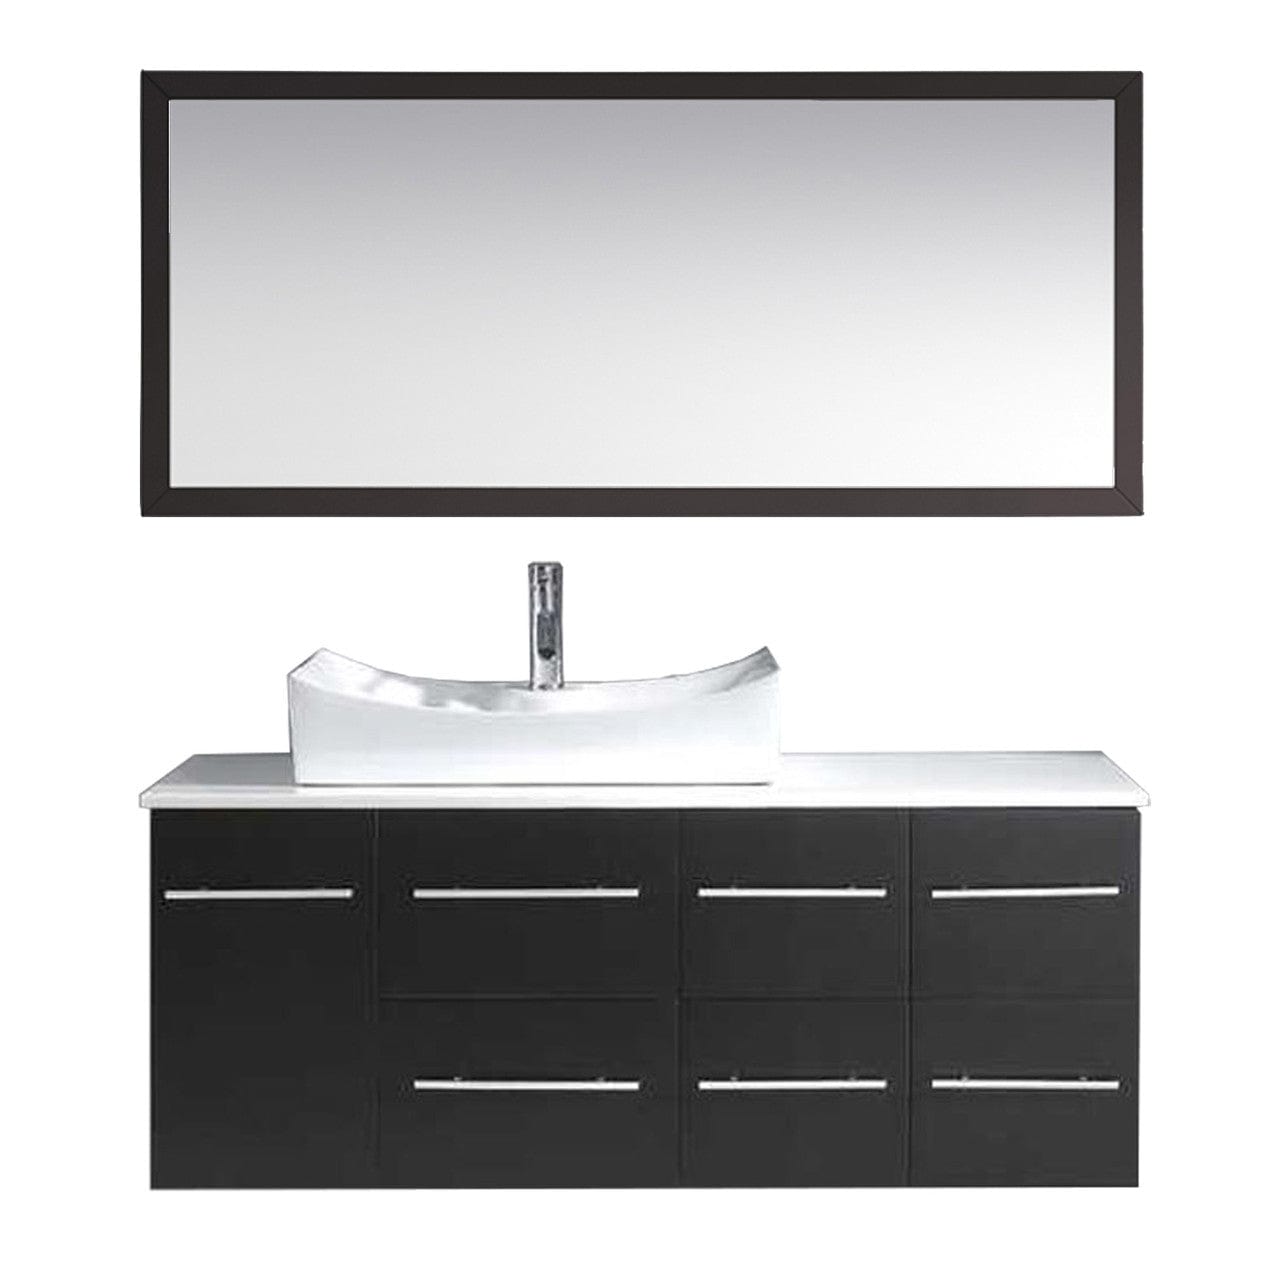 Virtu USA Ceanna 55 Single Bathroom Vanity Set in Espresso w/ White Artificial Stone Counter-Top white background